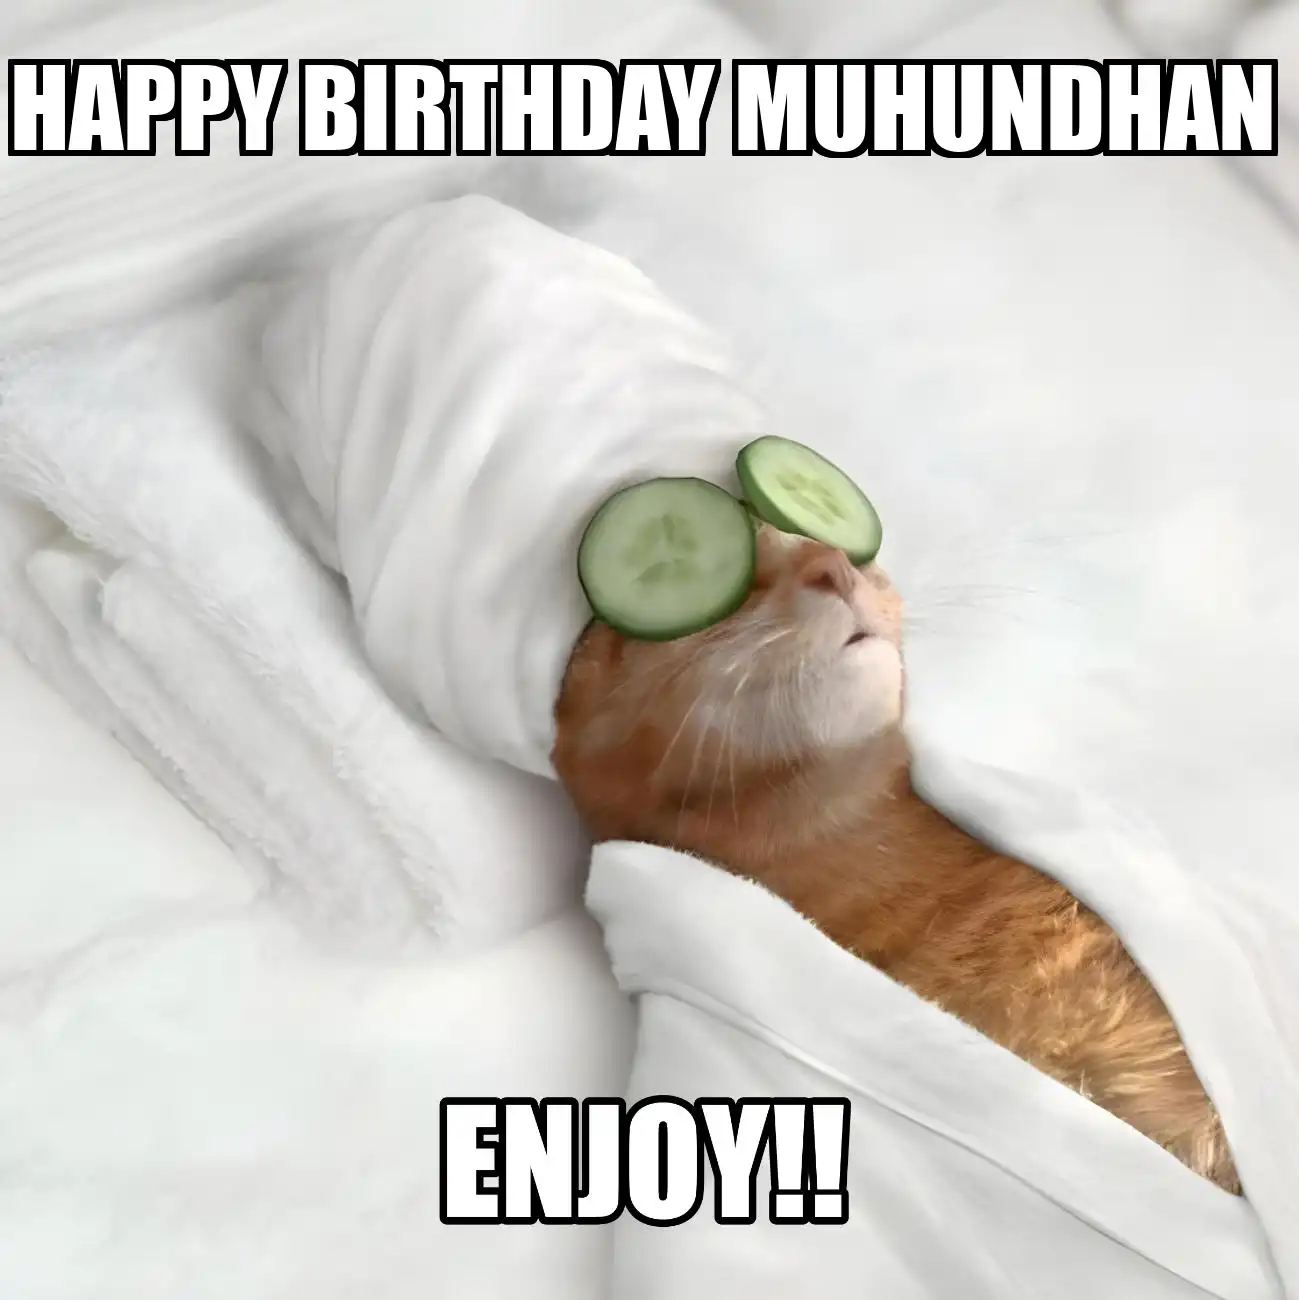 Happy Birthday Muhundhan Enjoy Cat Meme